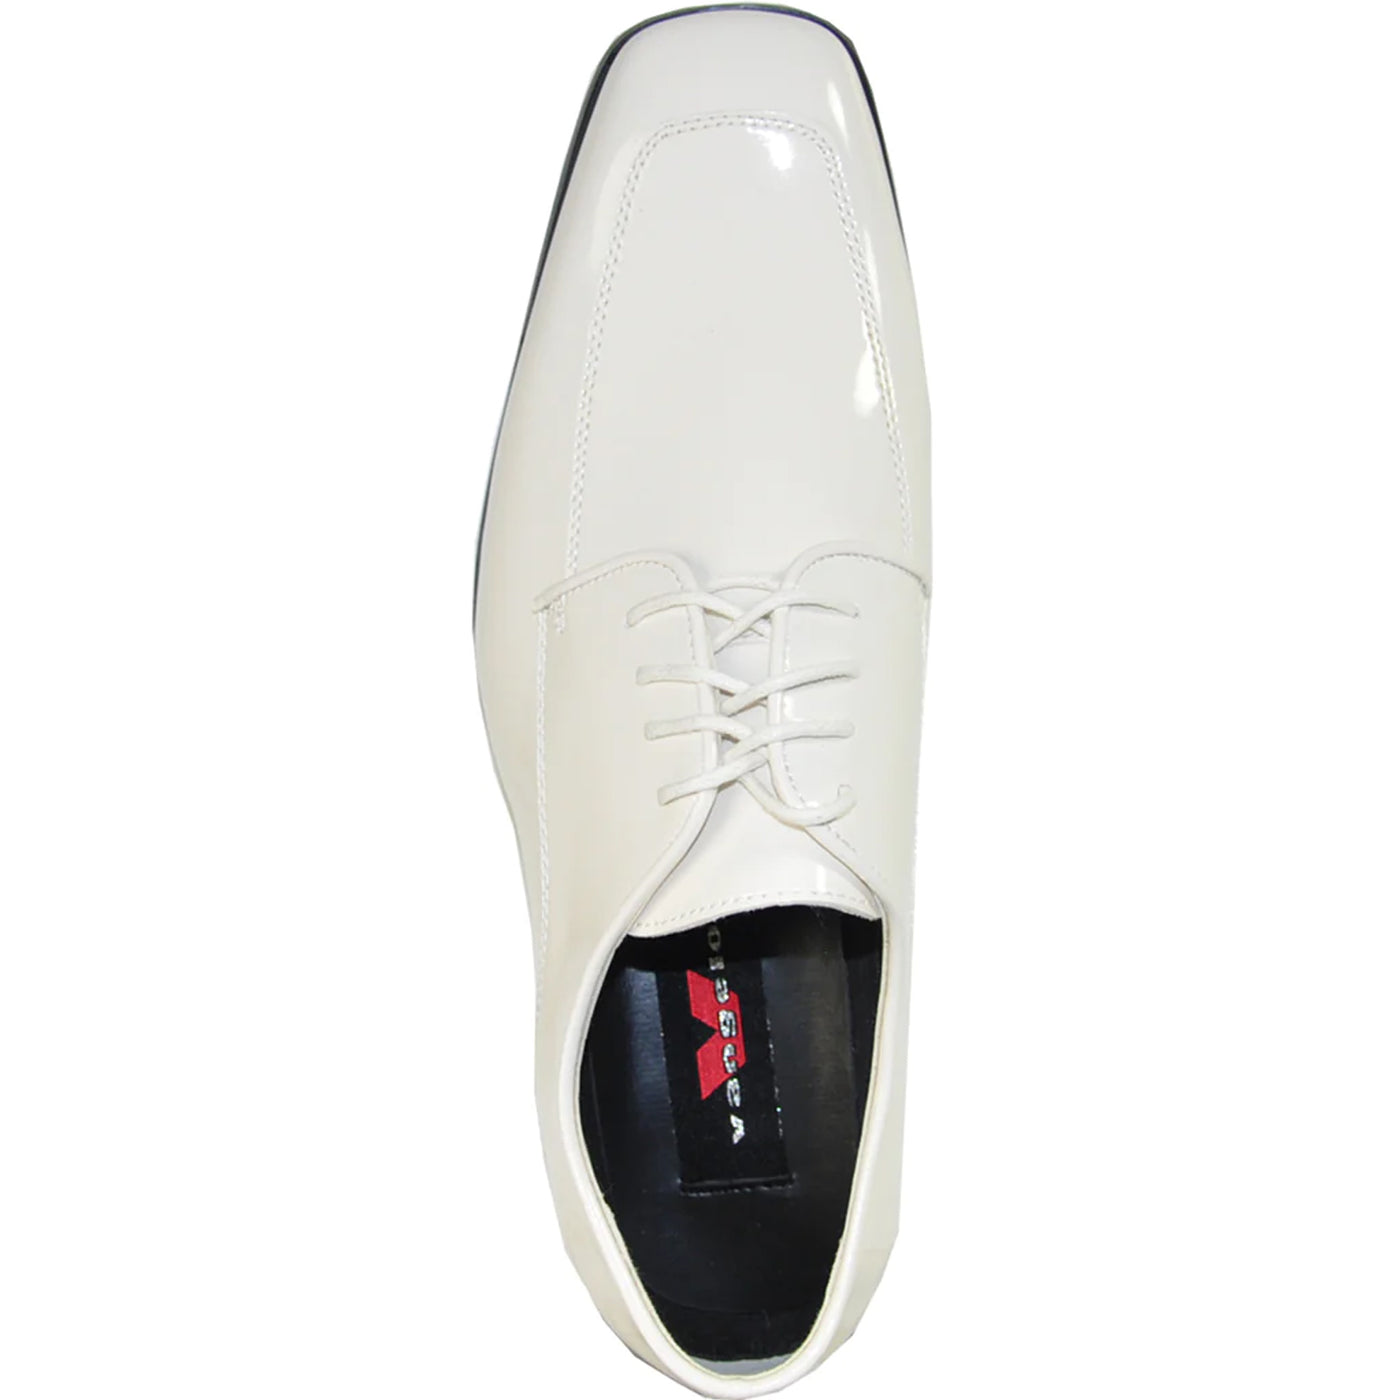 Mens Classic Moc Toe Shiny Patent Tuxedo Prom Shoe in Ivory